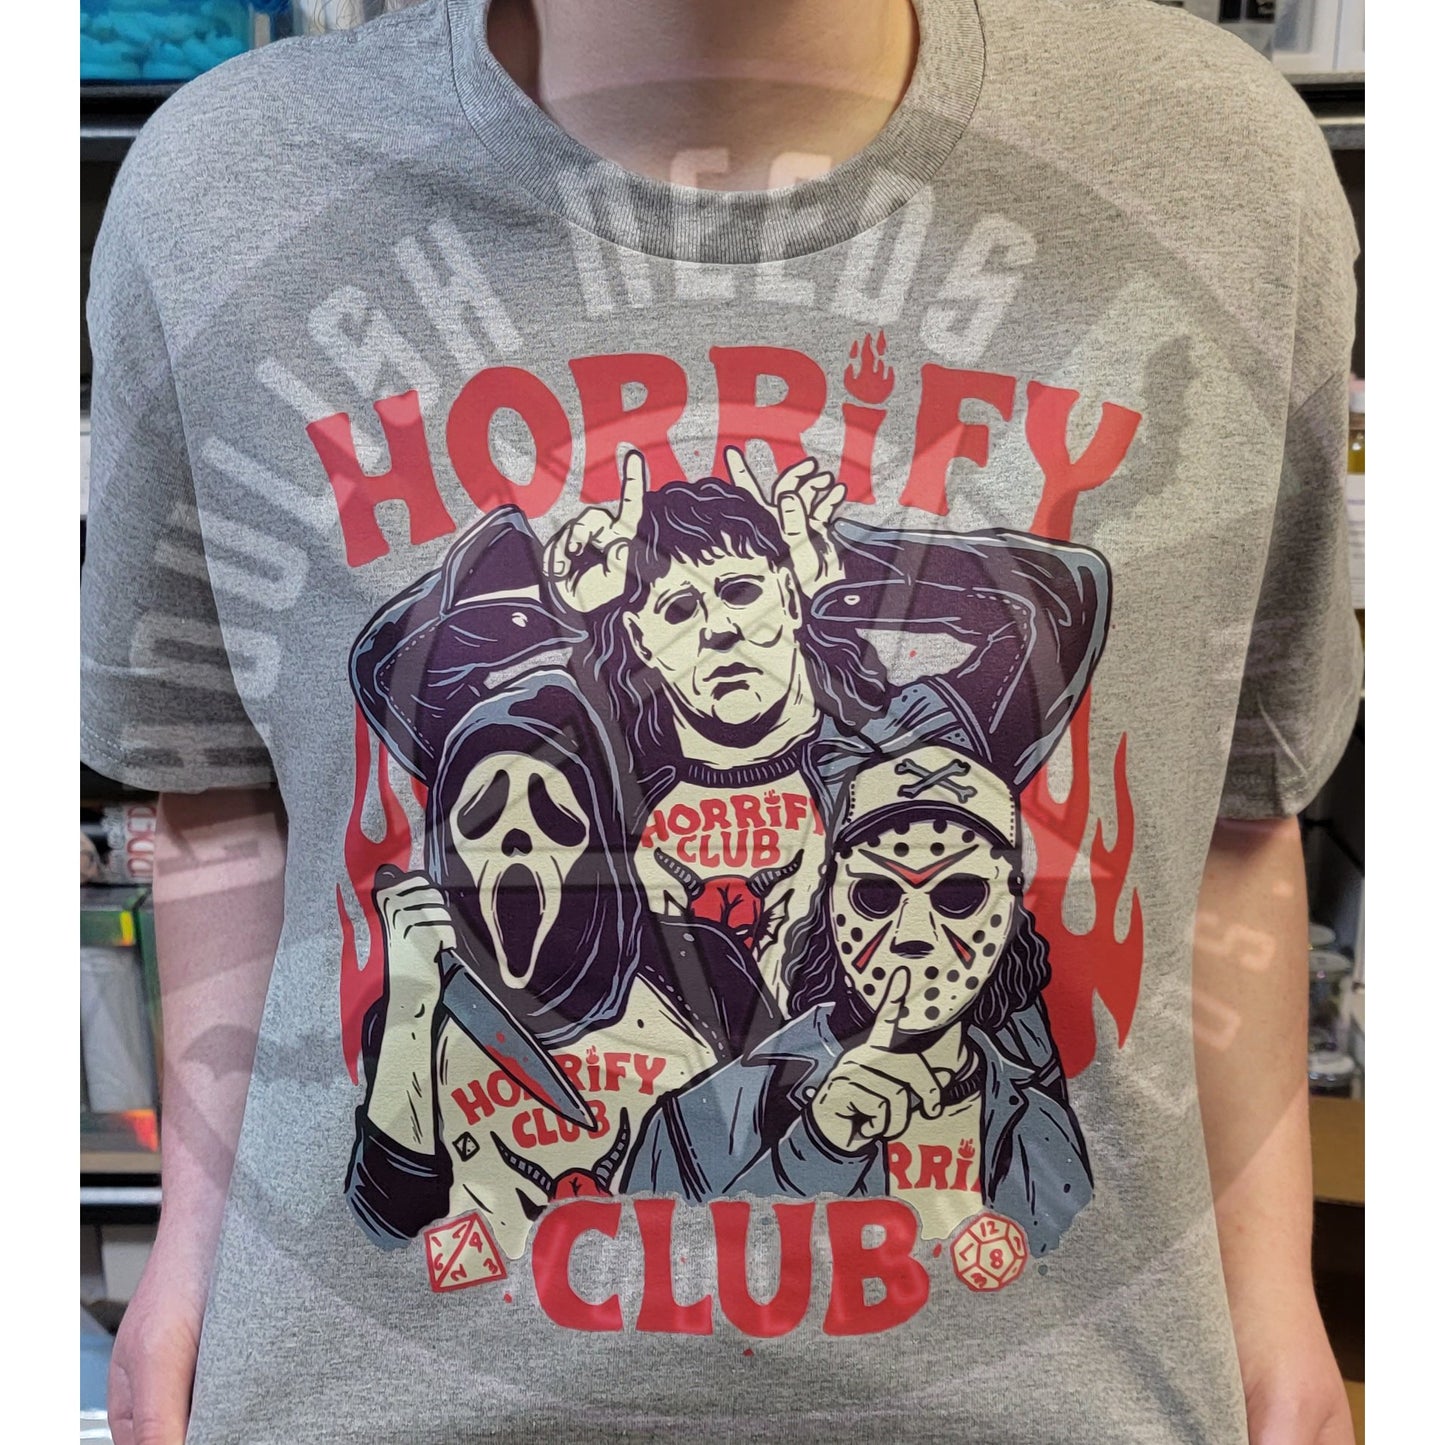 Horrify club Unisex T-shirt